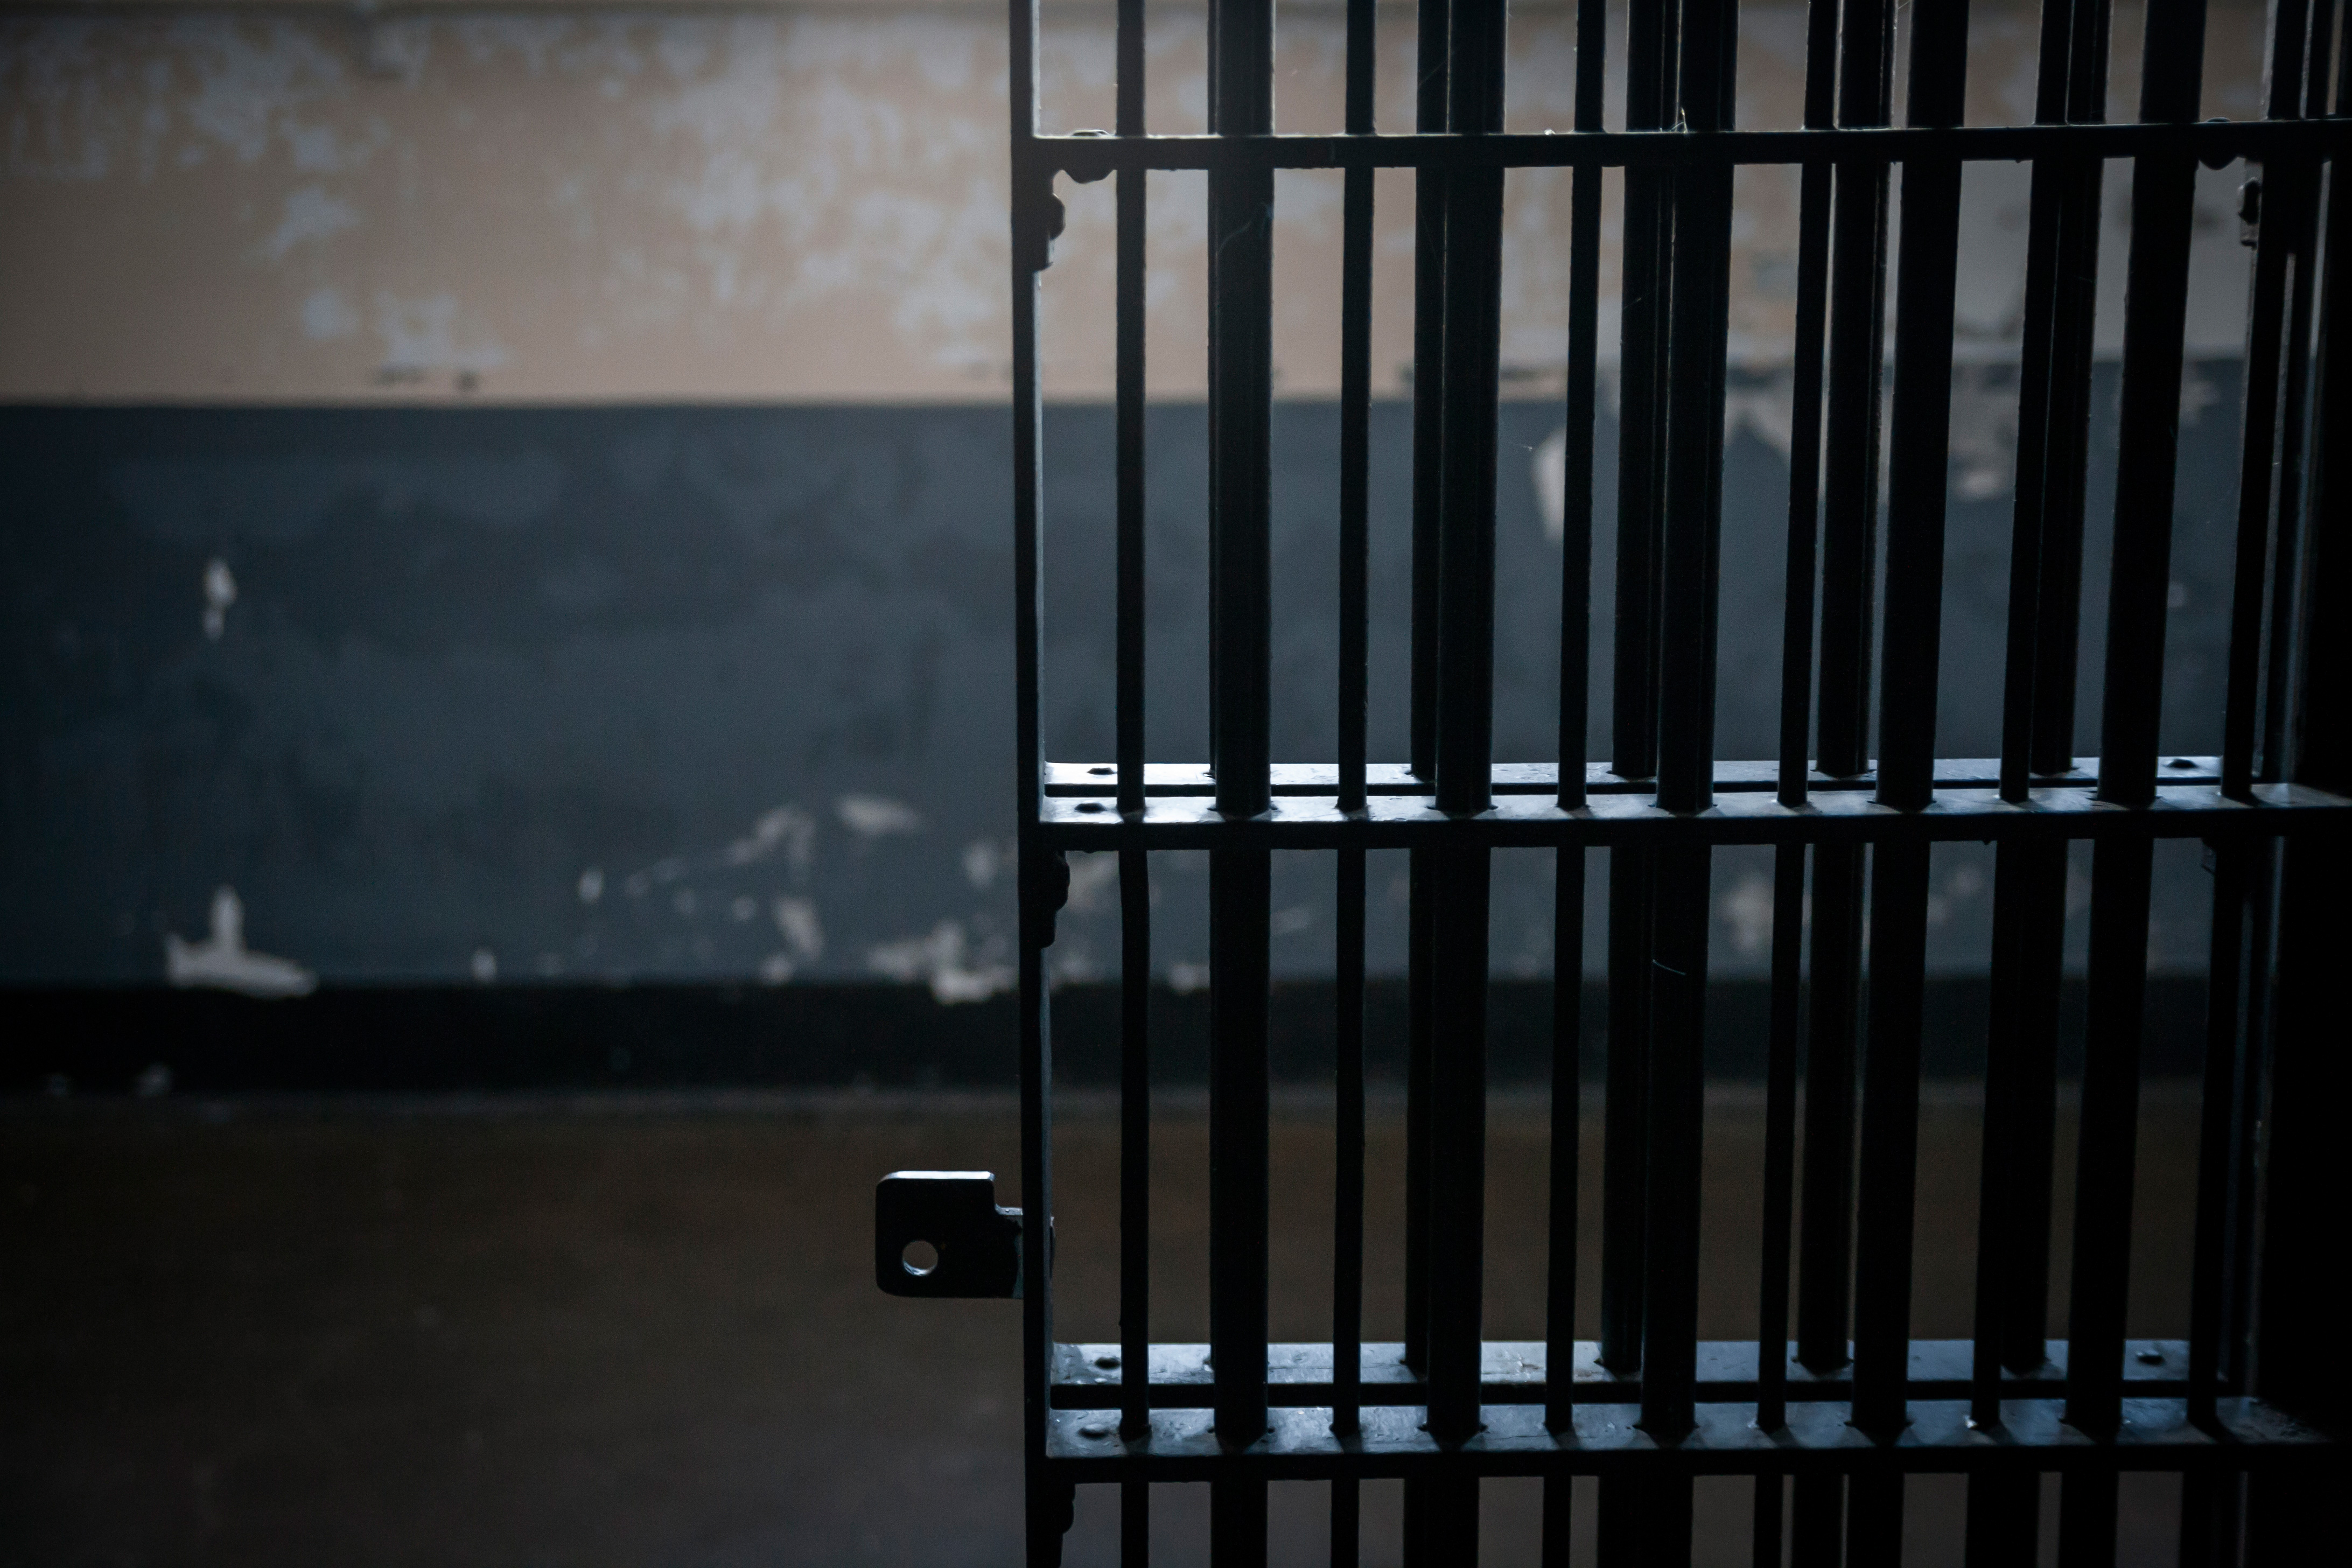 Stockton-on-Tees prison officer case 